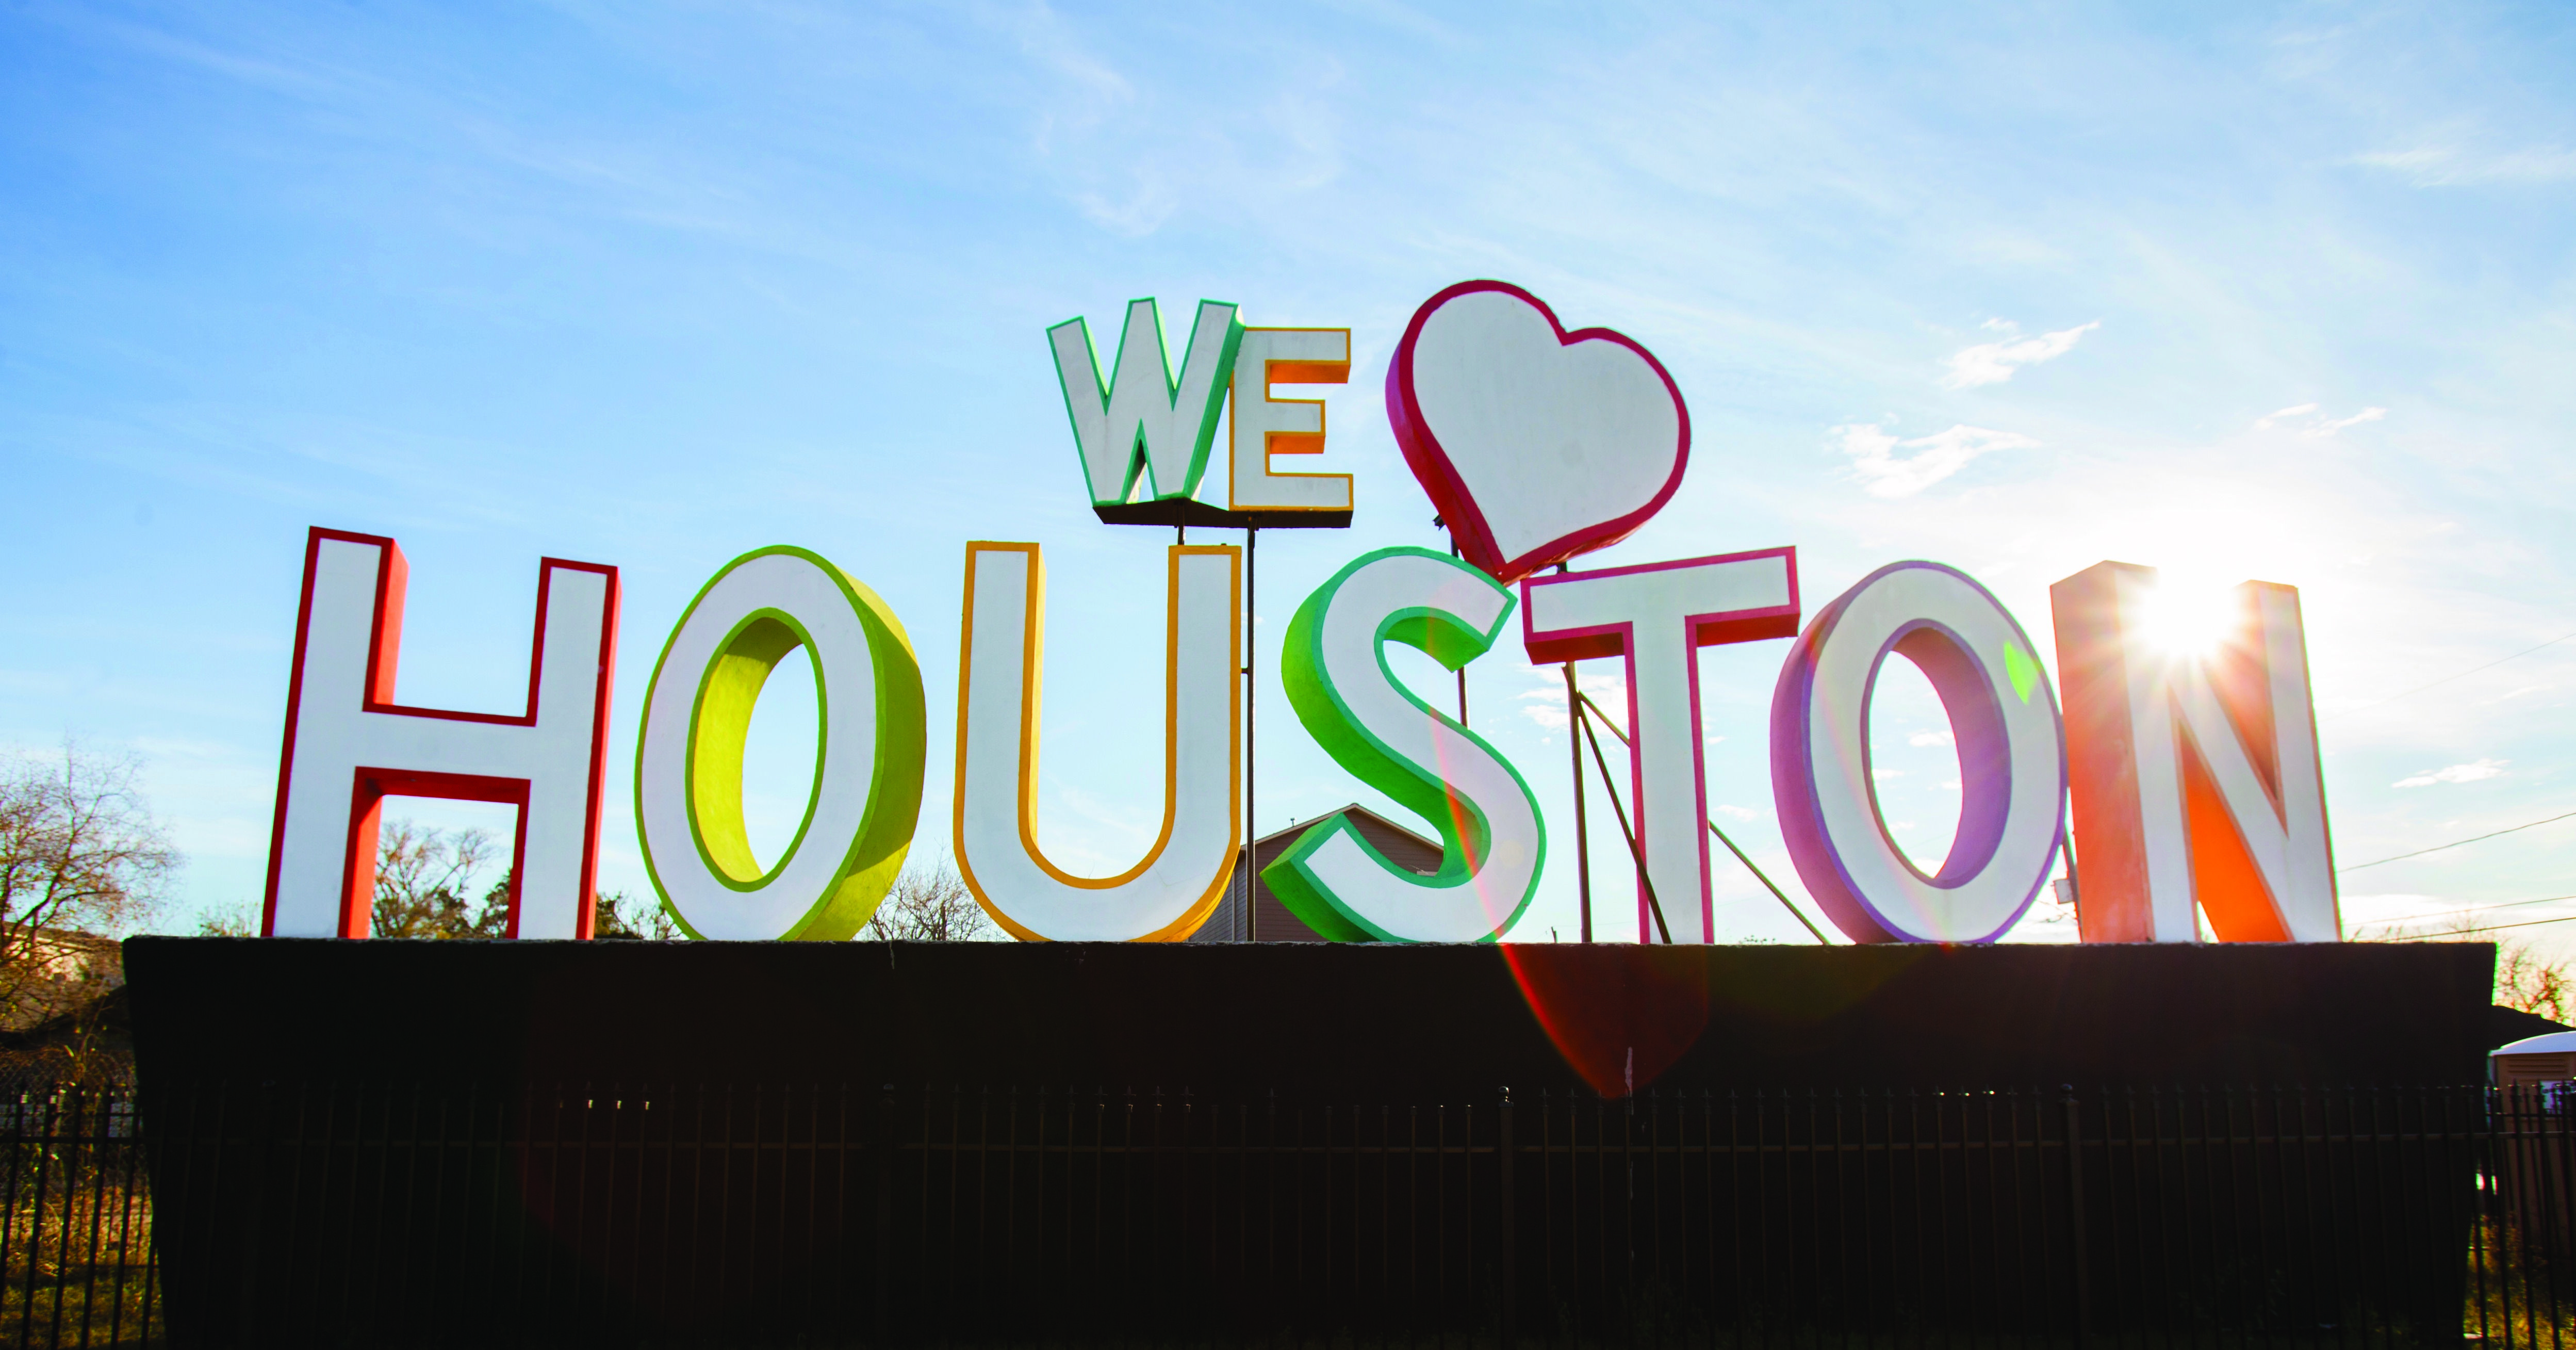 We love Houston sign